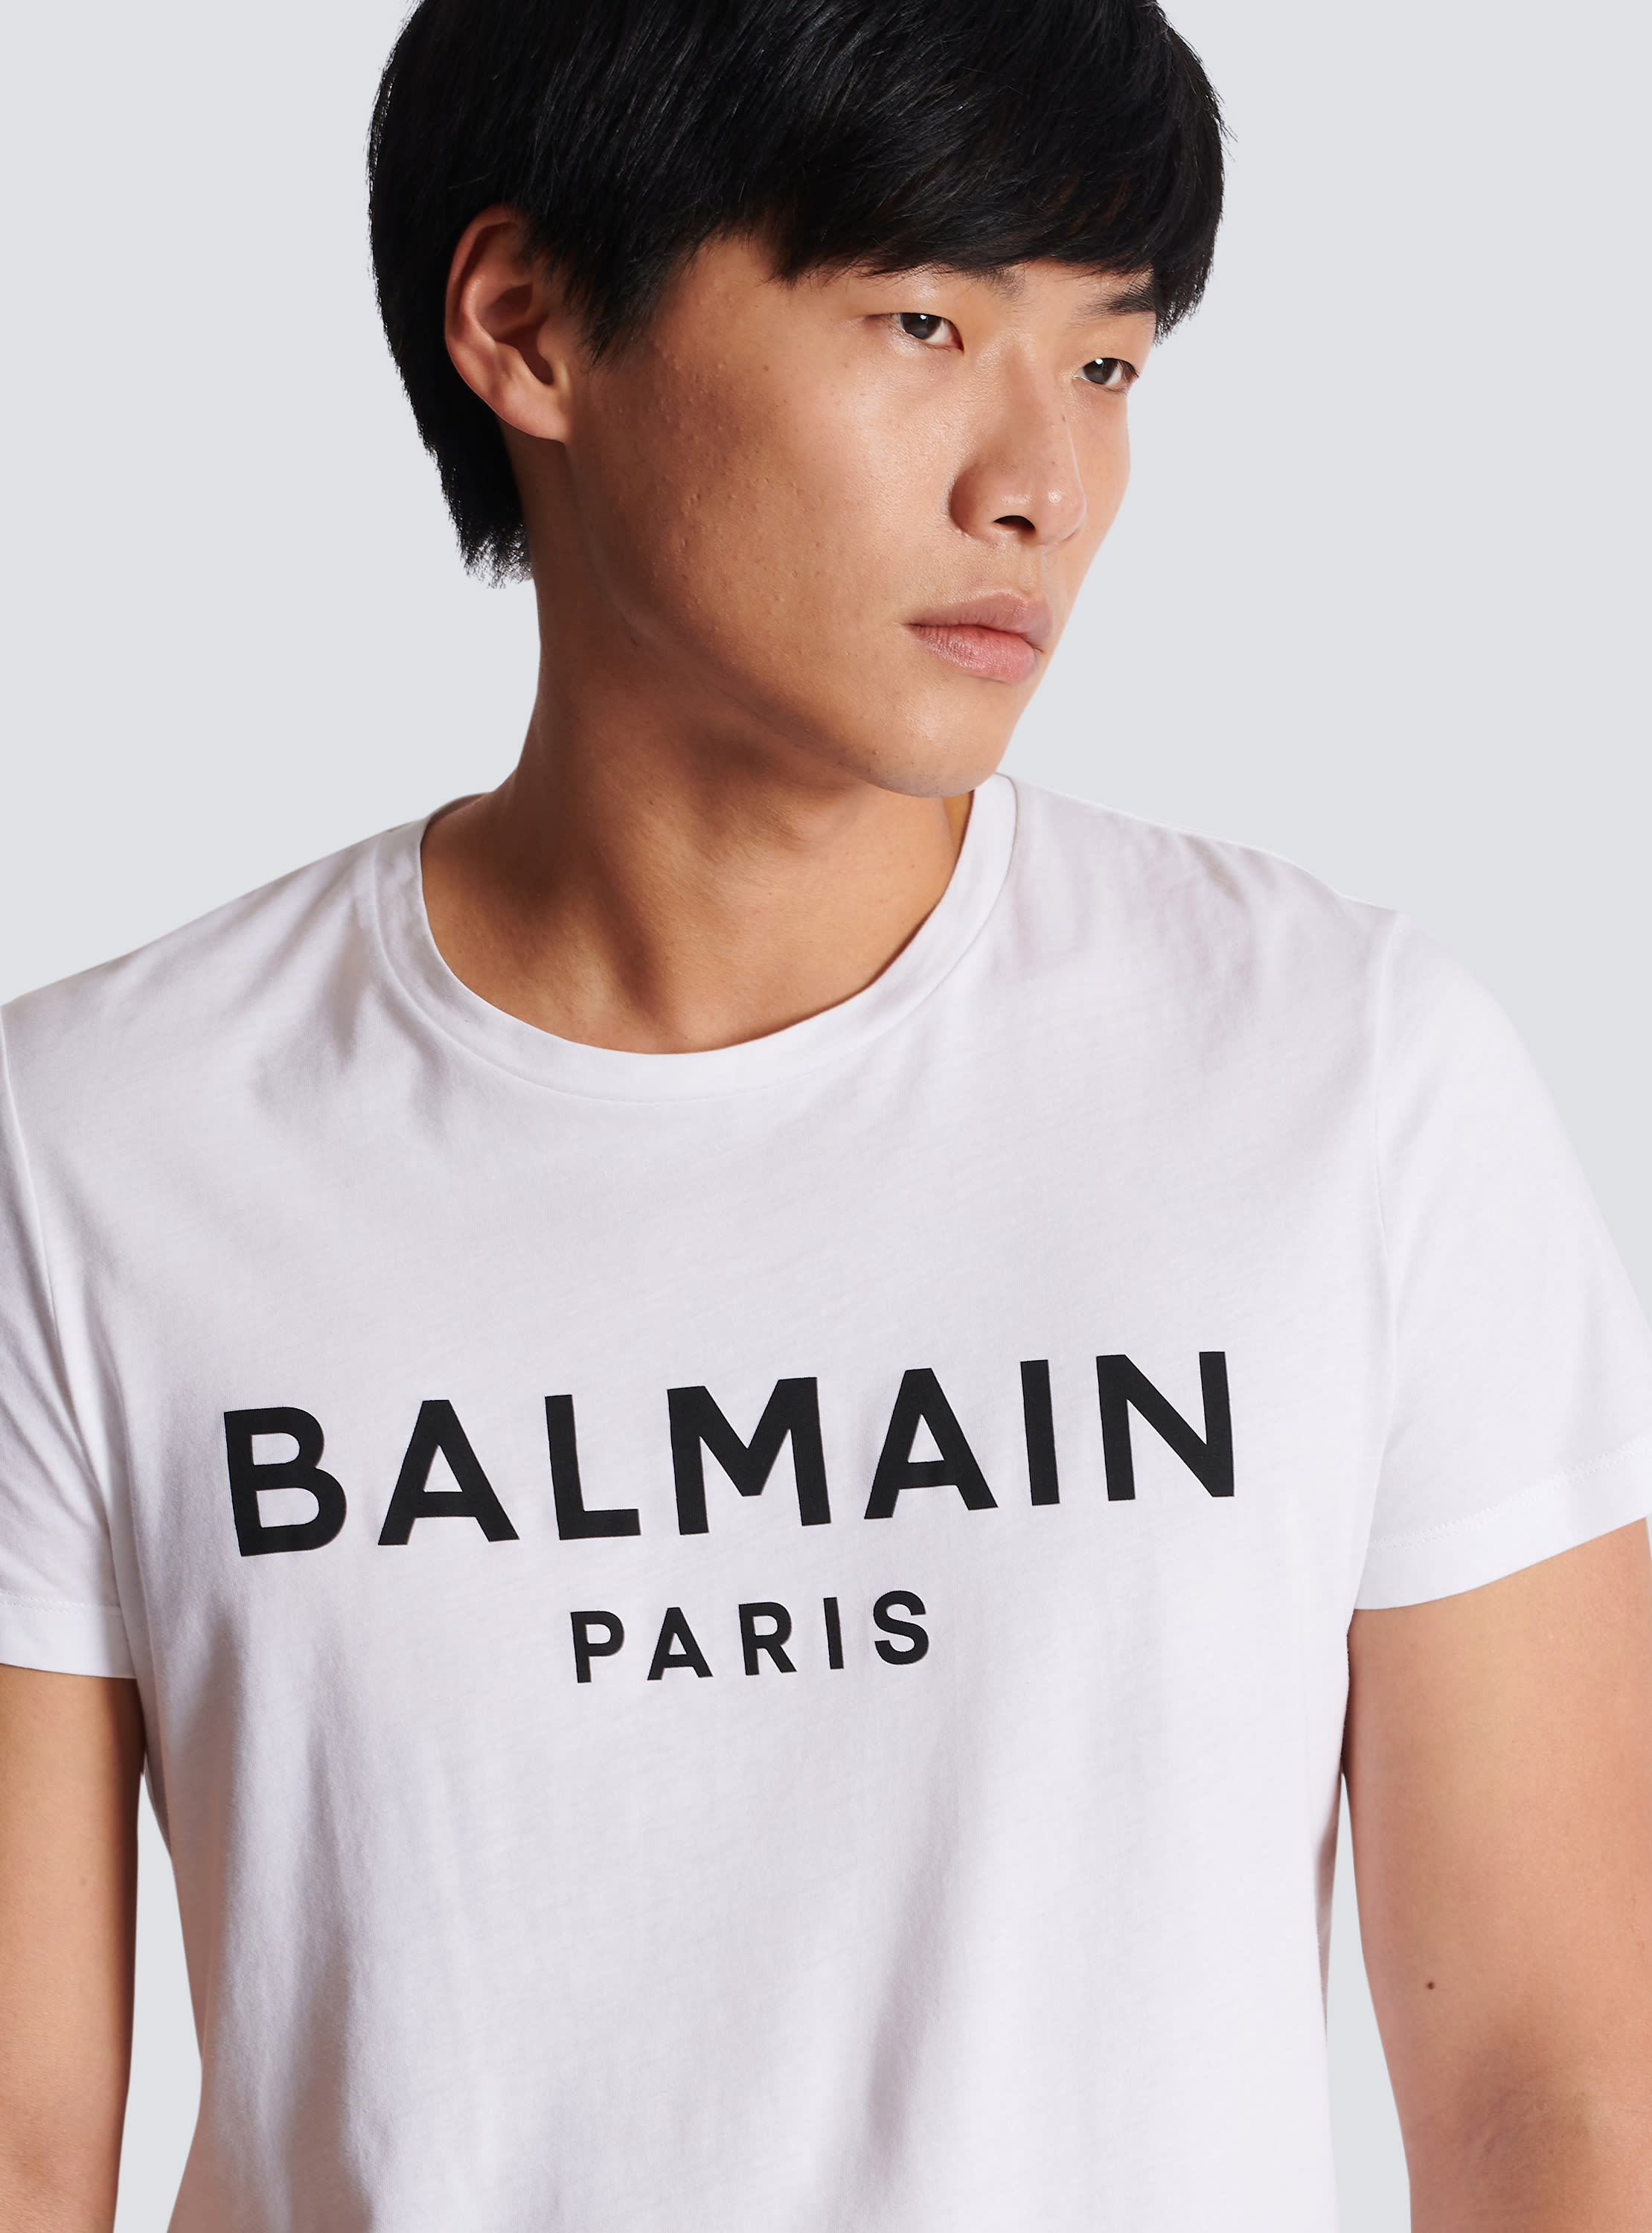 Balmain Paris Tシャツ - Men | BALMAIN